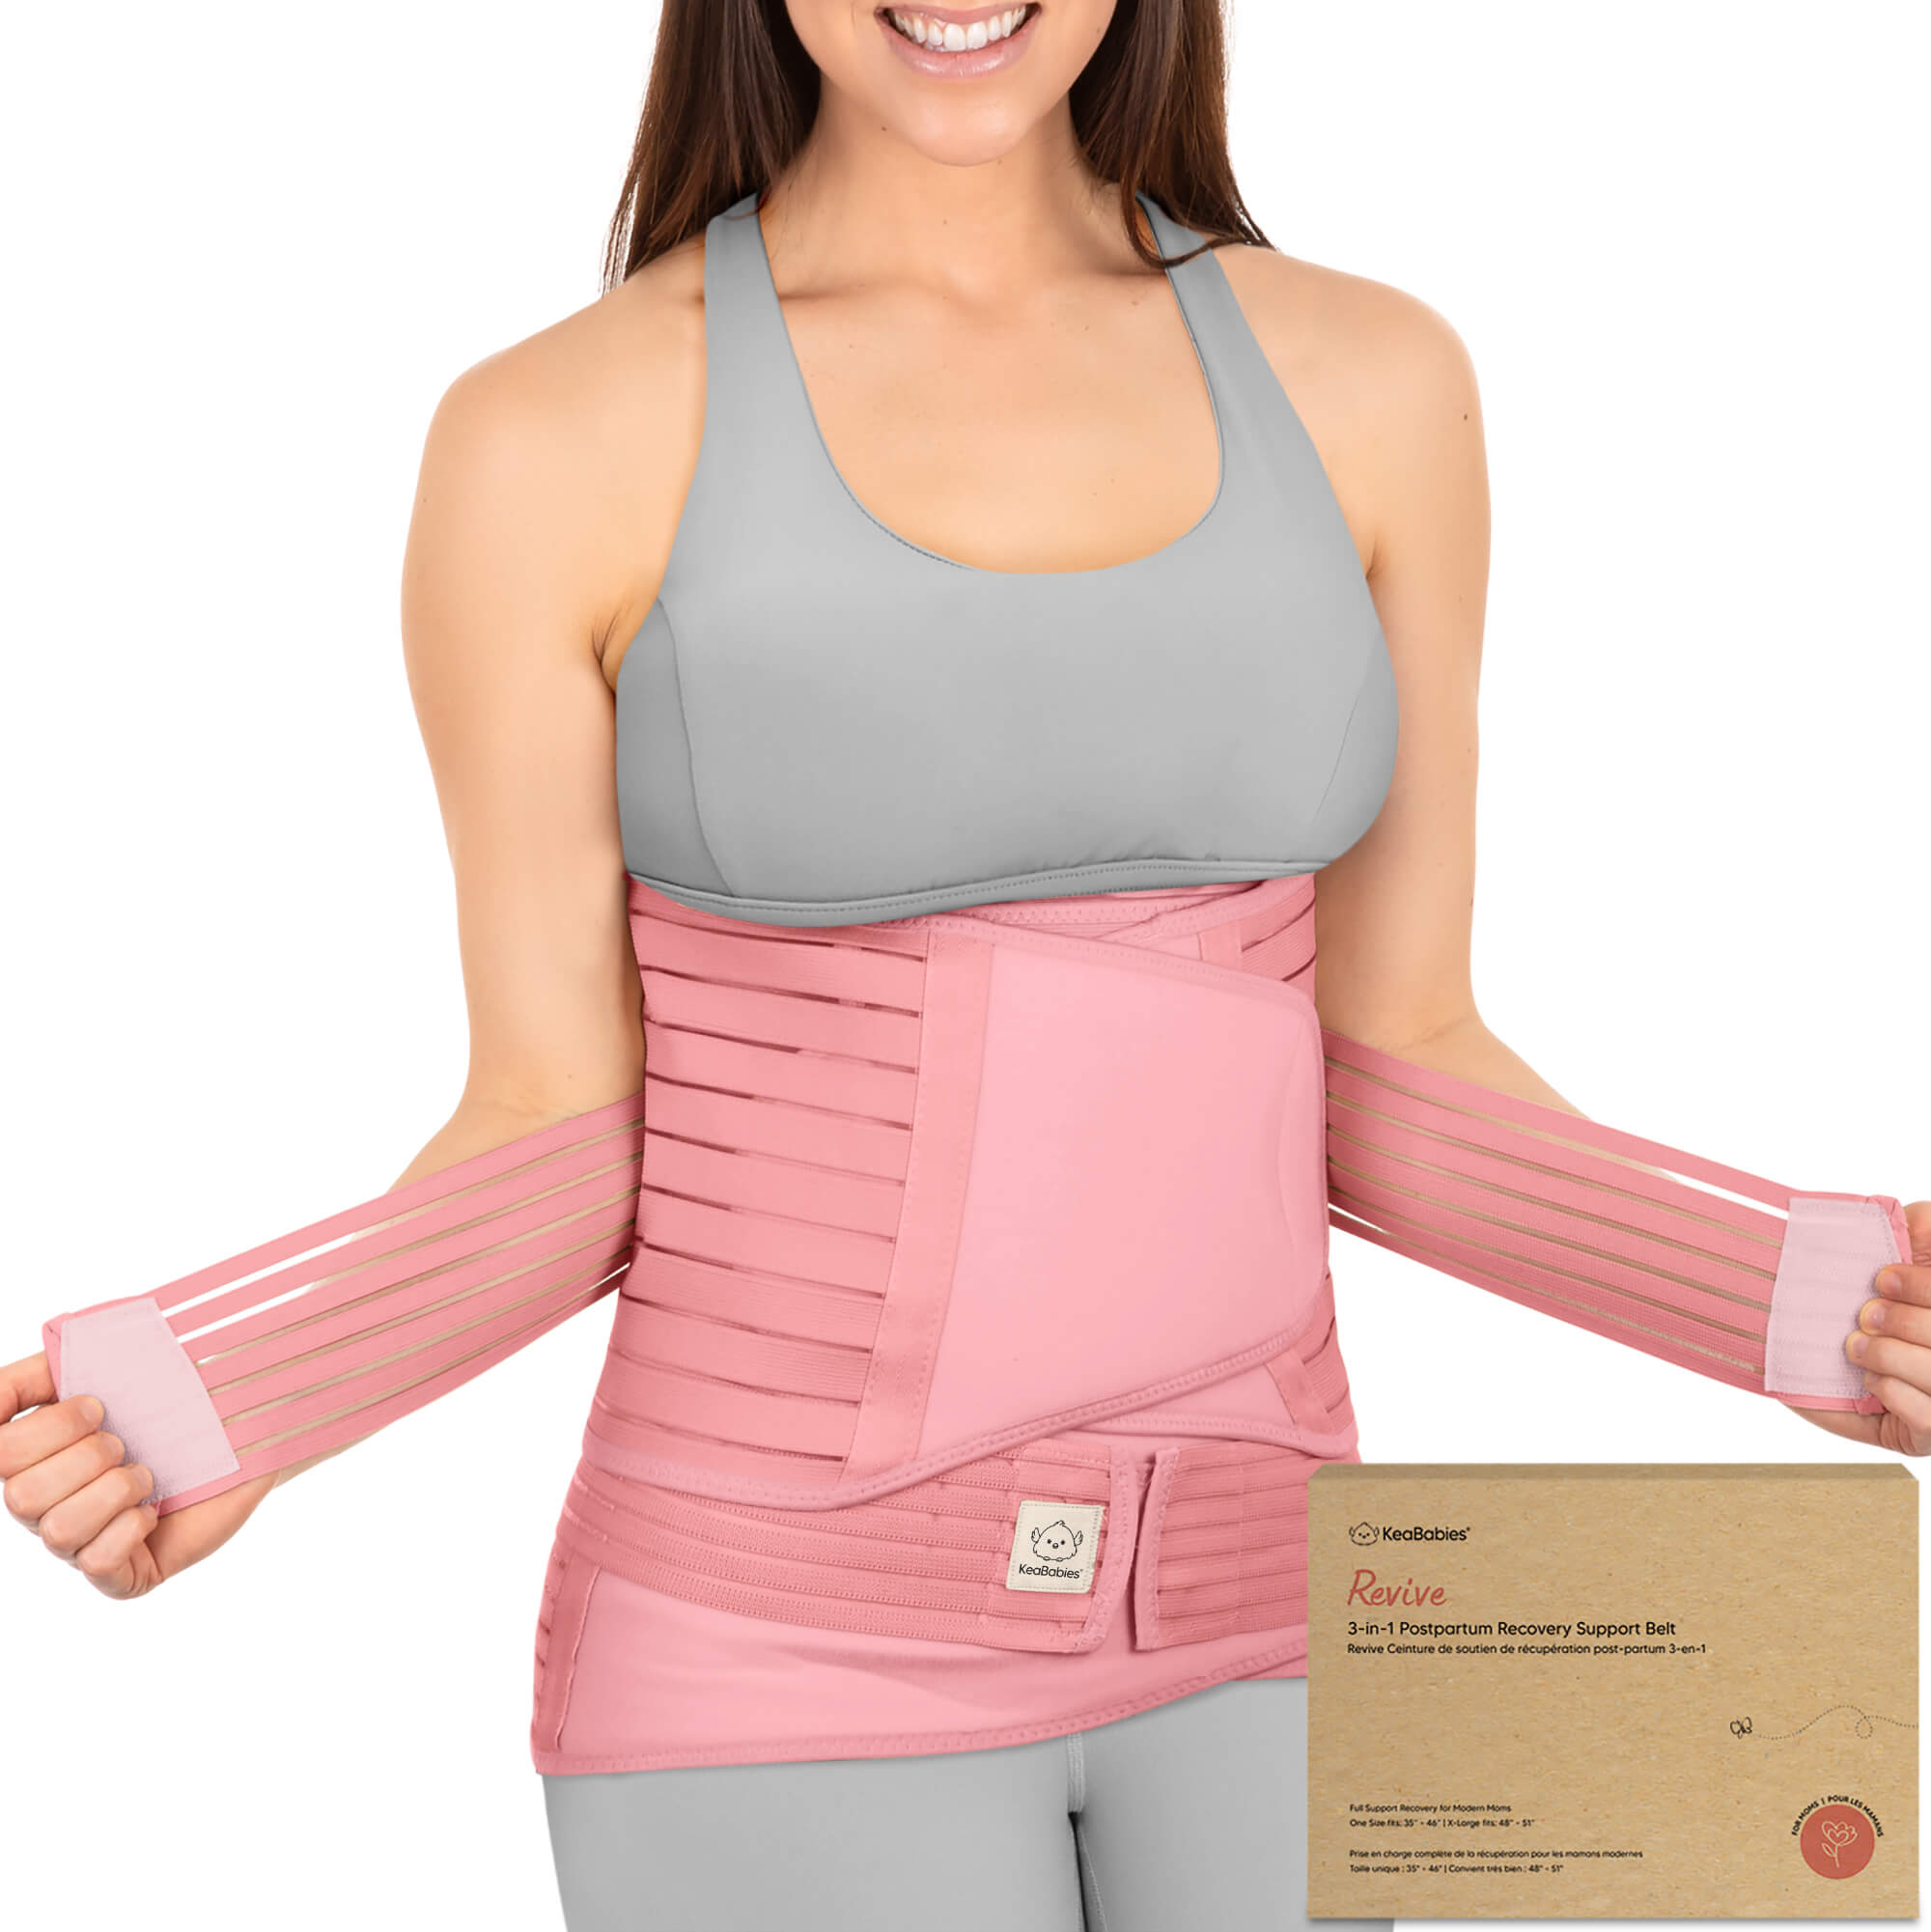 Abdominal Binder Postpartum Belly Band for Post Abdomen Surgery C-section  Recovery Compression Wrap Back Support Belt (Medium Beige) Medium Beige